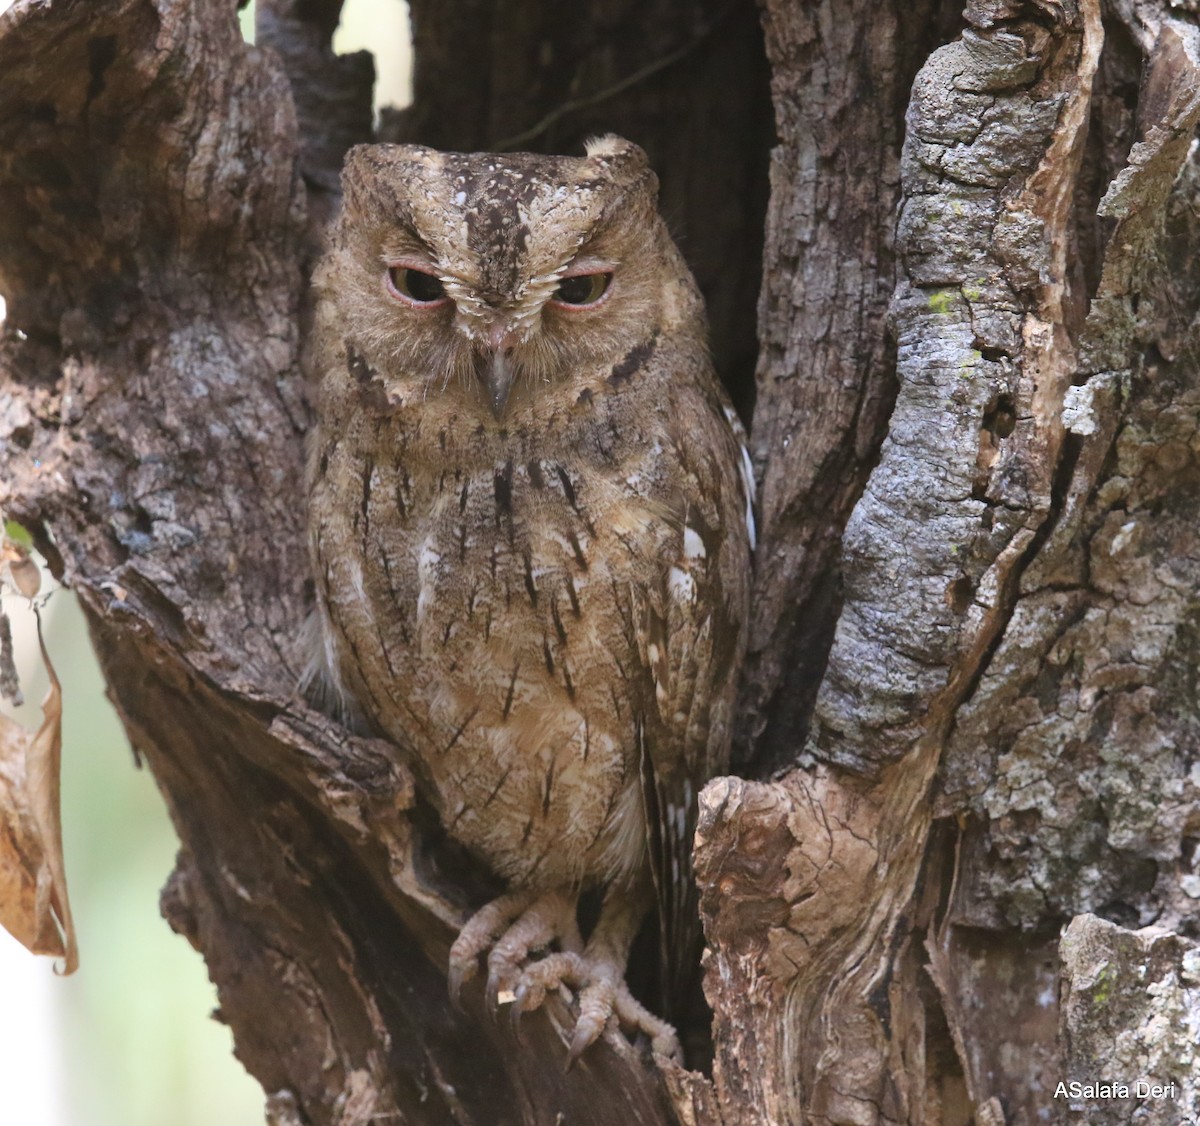 Madagascar Scops-Owl (Torotoroka) - Fanis Theofanopoulos (ASalafa Deri)